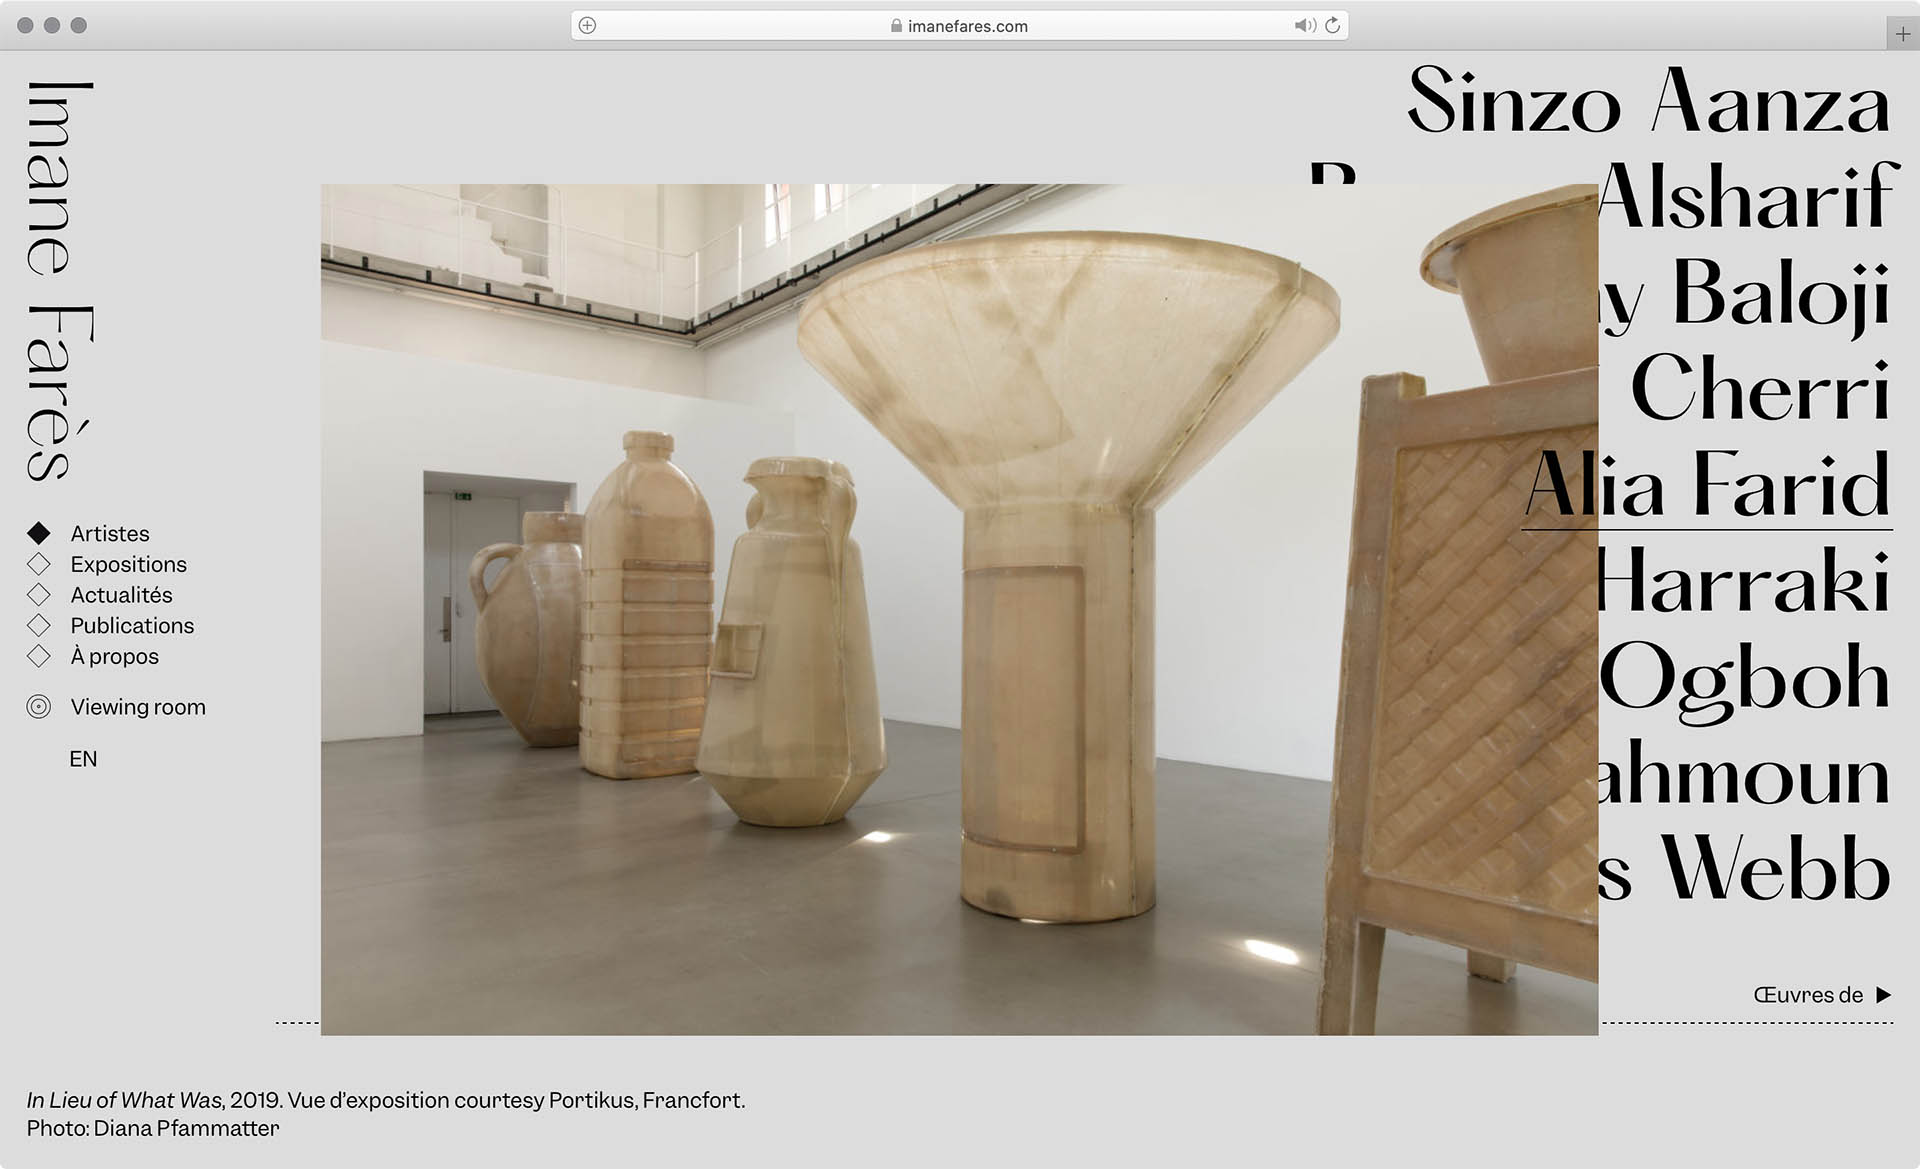 Cyril Makhoul - (link: https://imanefares.com/ text: Galerie Imane Farès) — Visual Identity and webdesign.